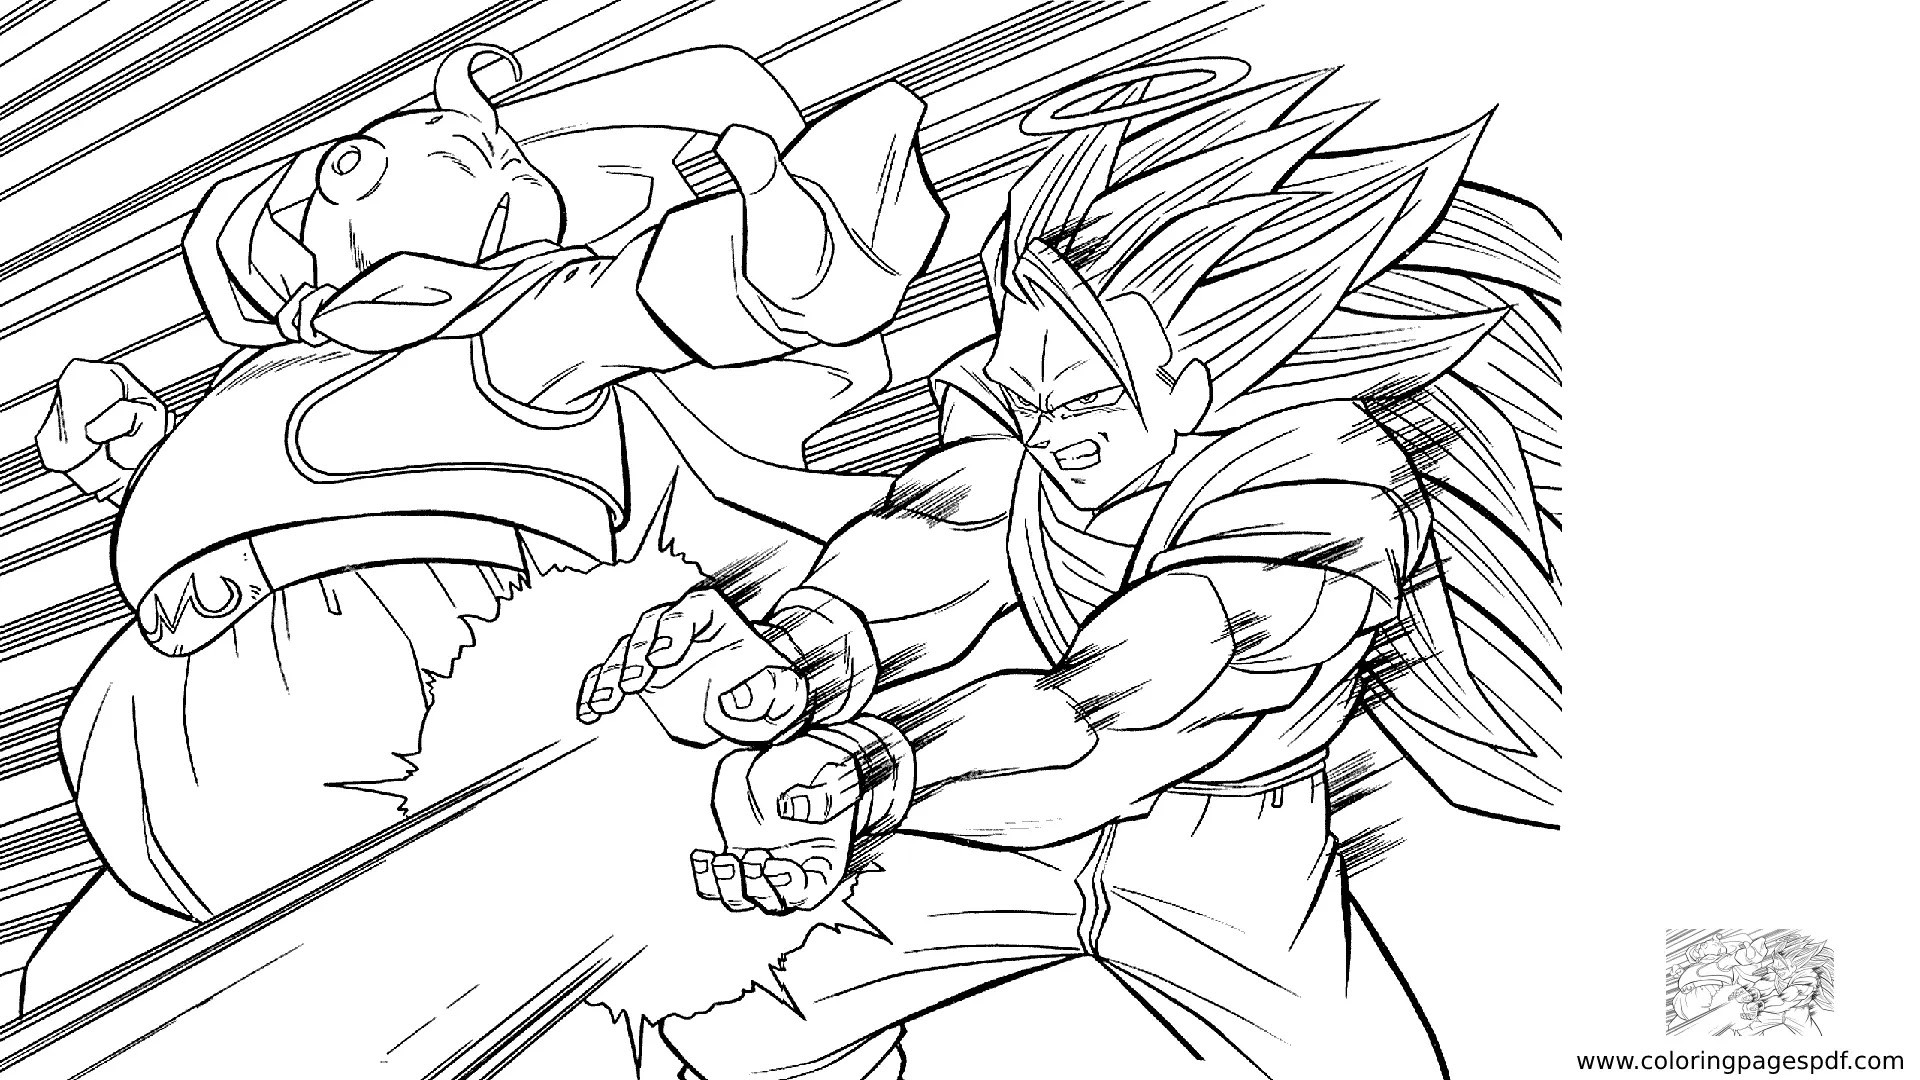 Coloring Page Of Goku SSJ20 Vs Majin Buu